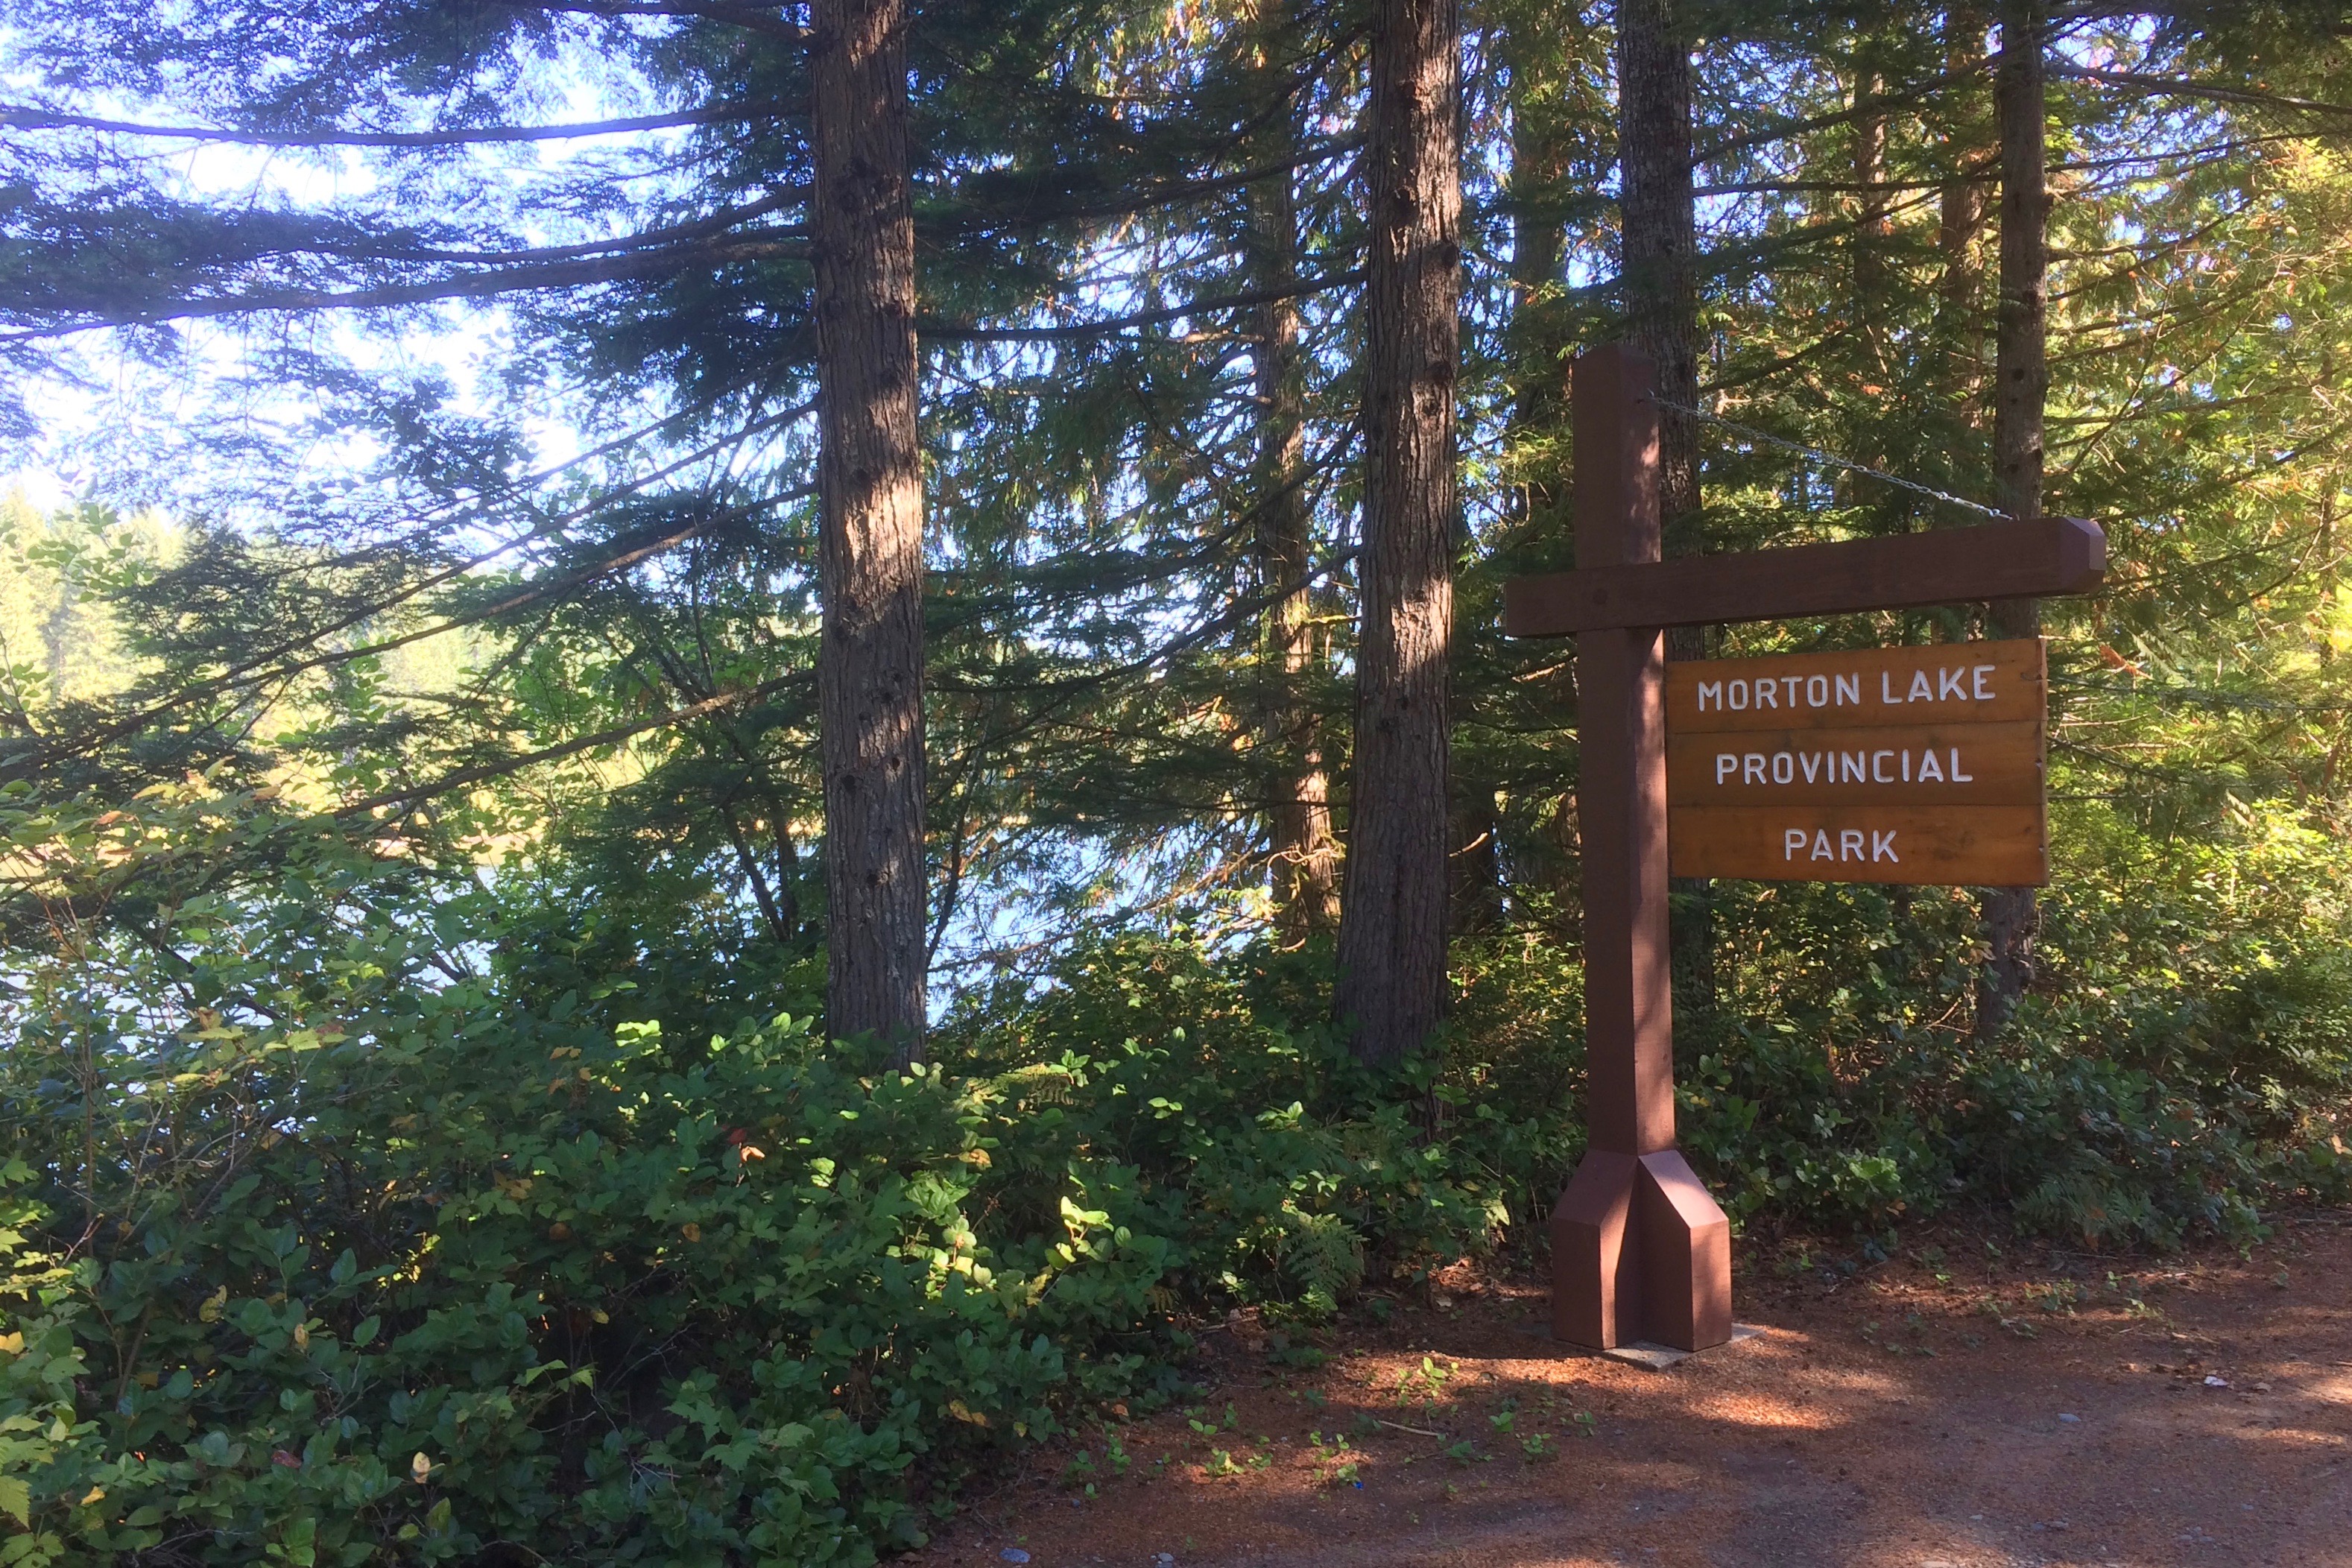 Morton Lake Provincial Park BC Parks sign